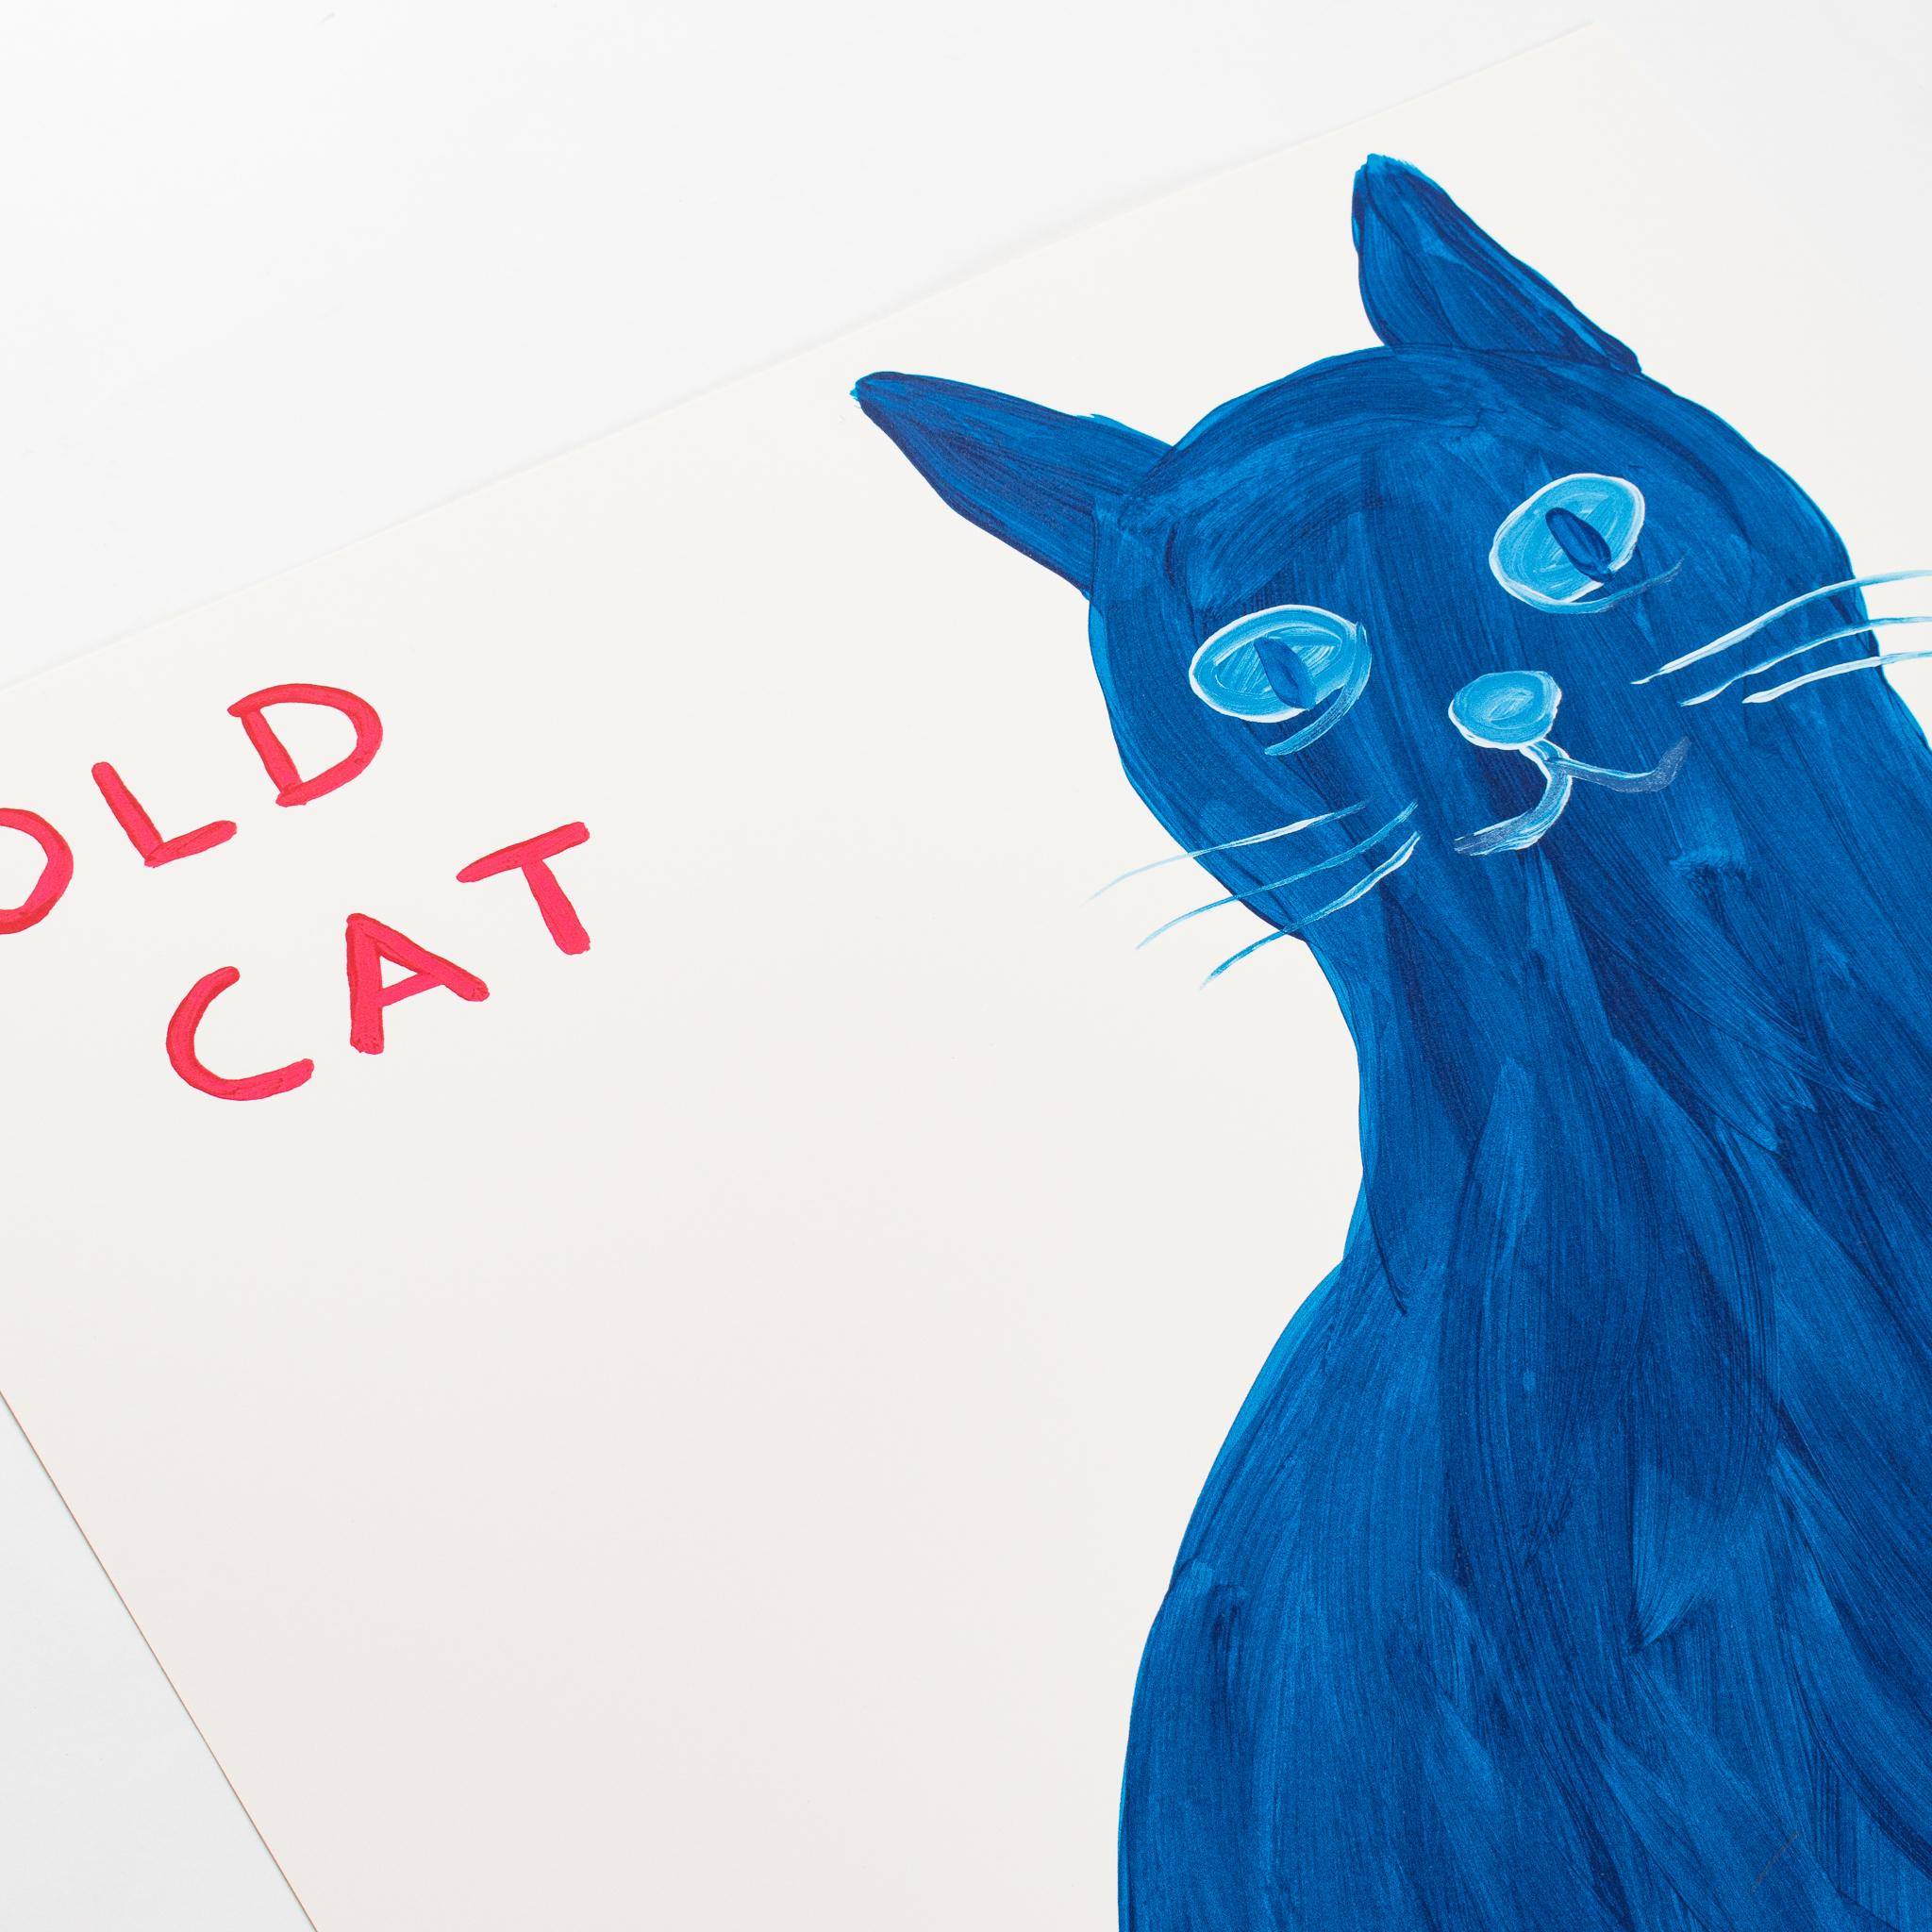 Old Cat - Print by David Shrigley